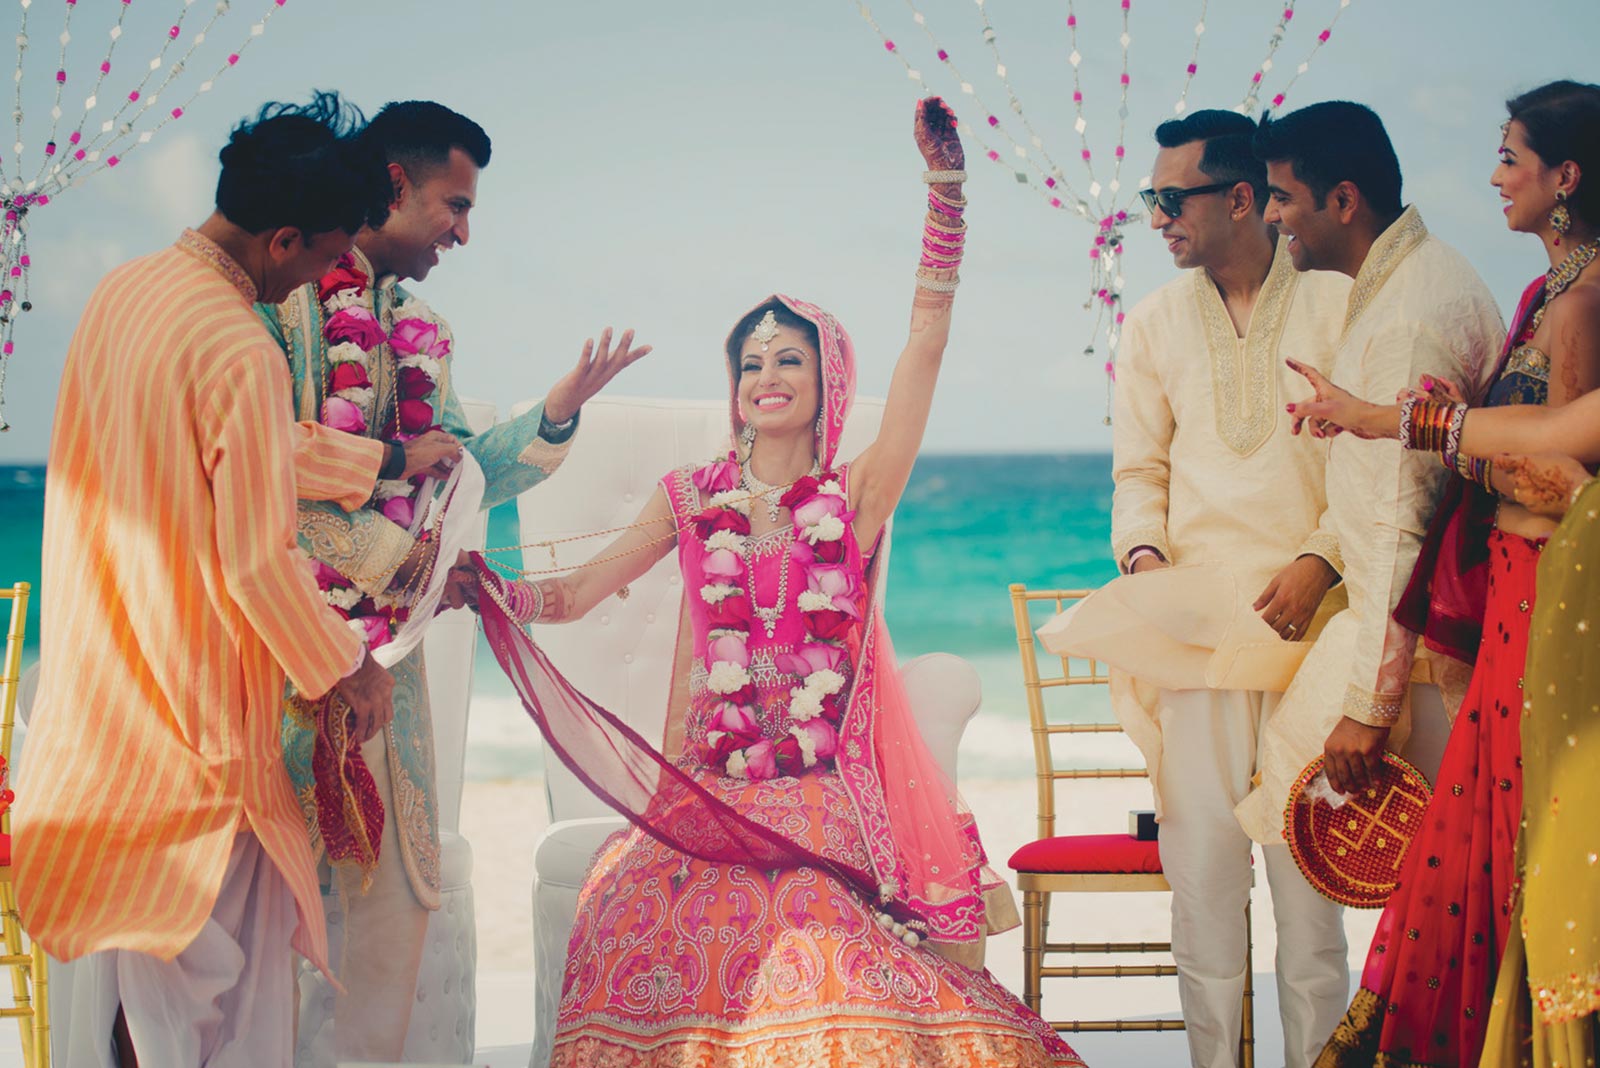 hard rock punta cana indian wedding inspiration beach wedding